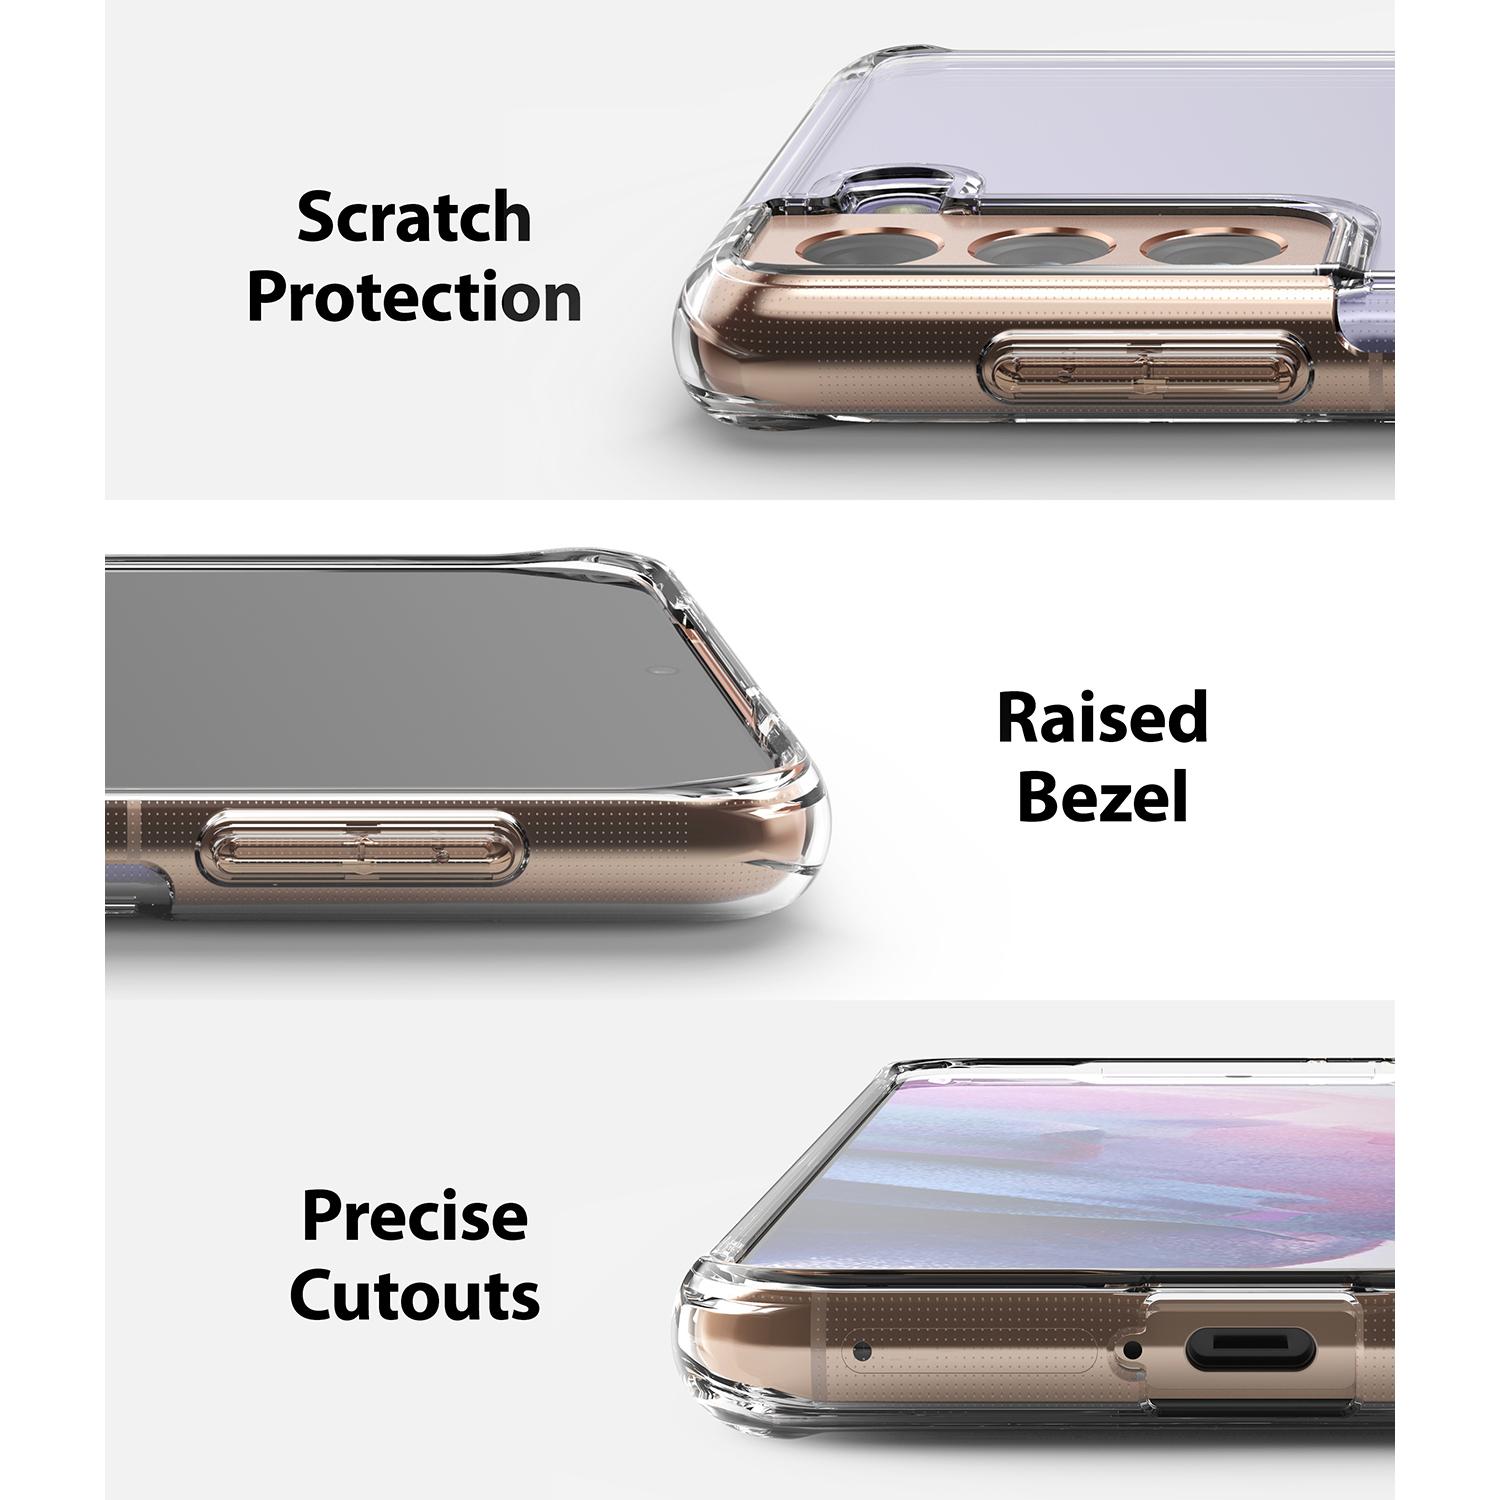 Fusion Case Samsung Galaxy S21 Clear